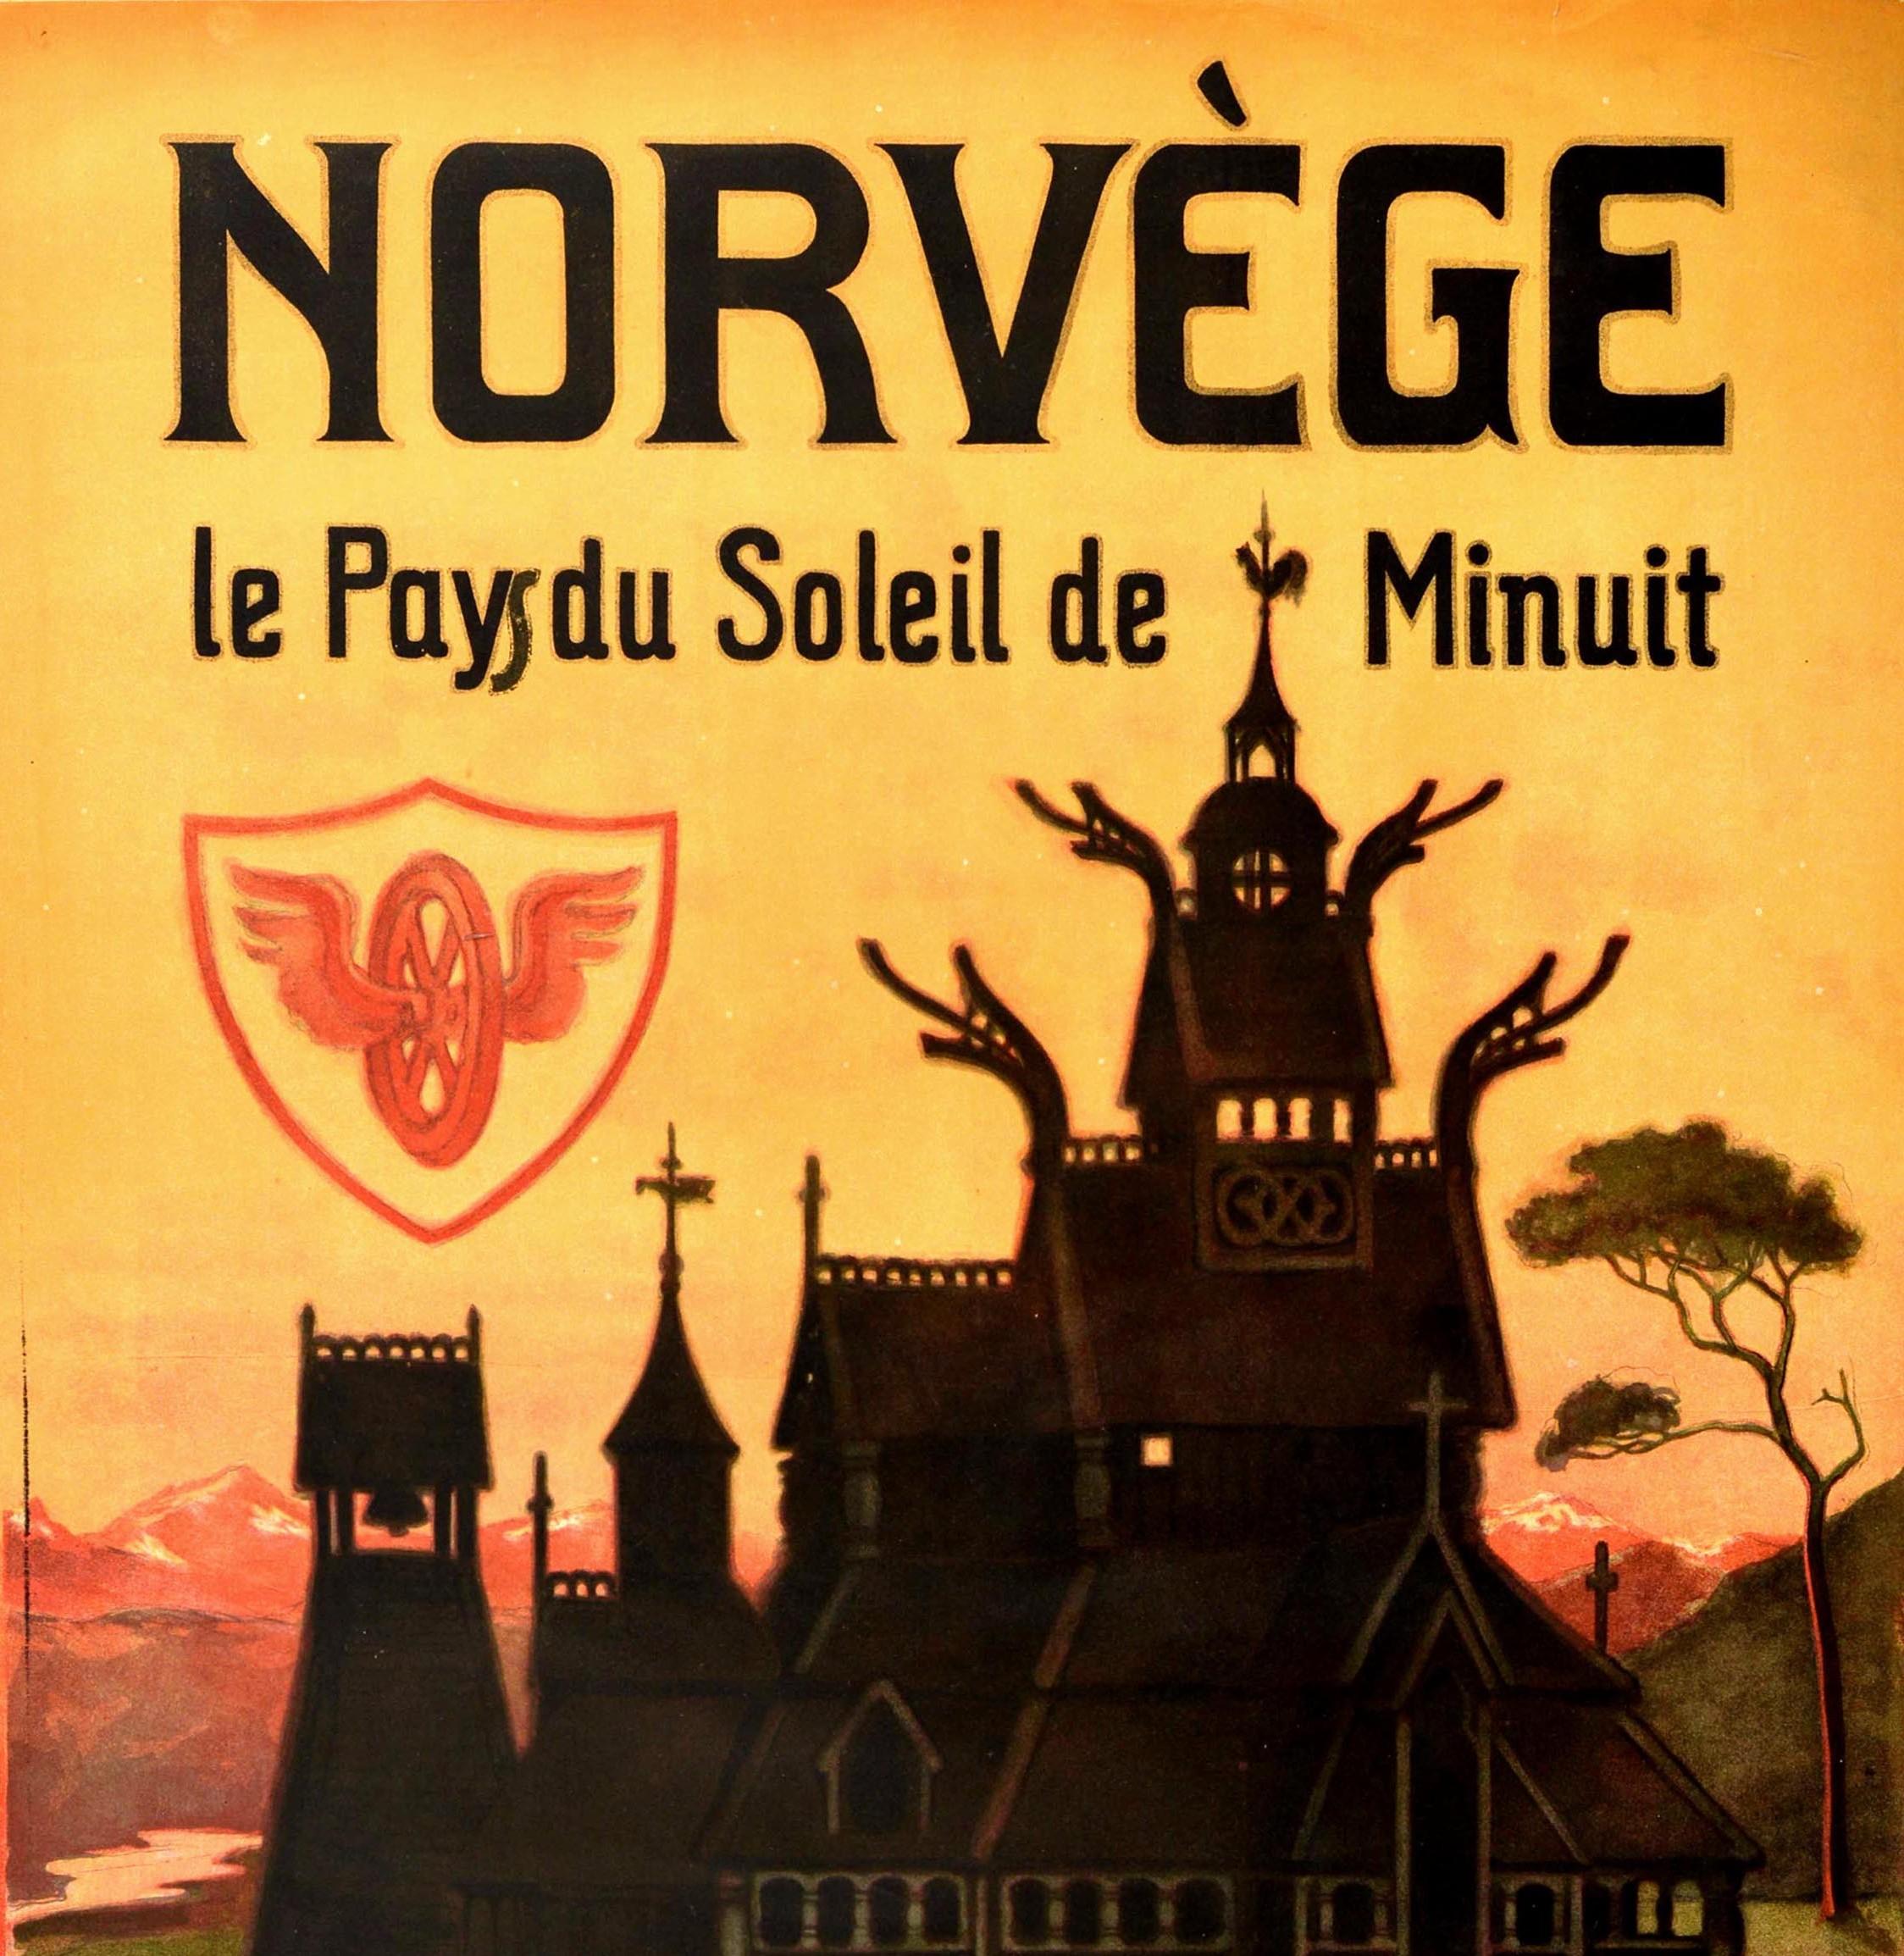 Original Antique Poster Norvege Norway Midnight Sun Stavkirke Church Travel Map - Print by Othar Holmboe